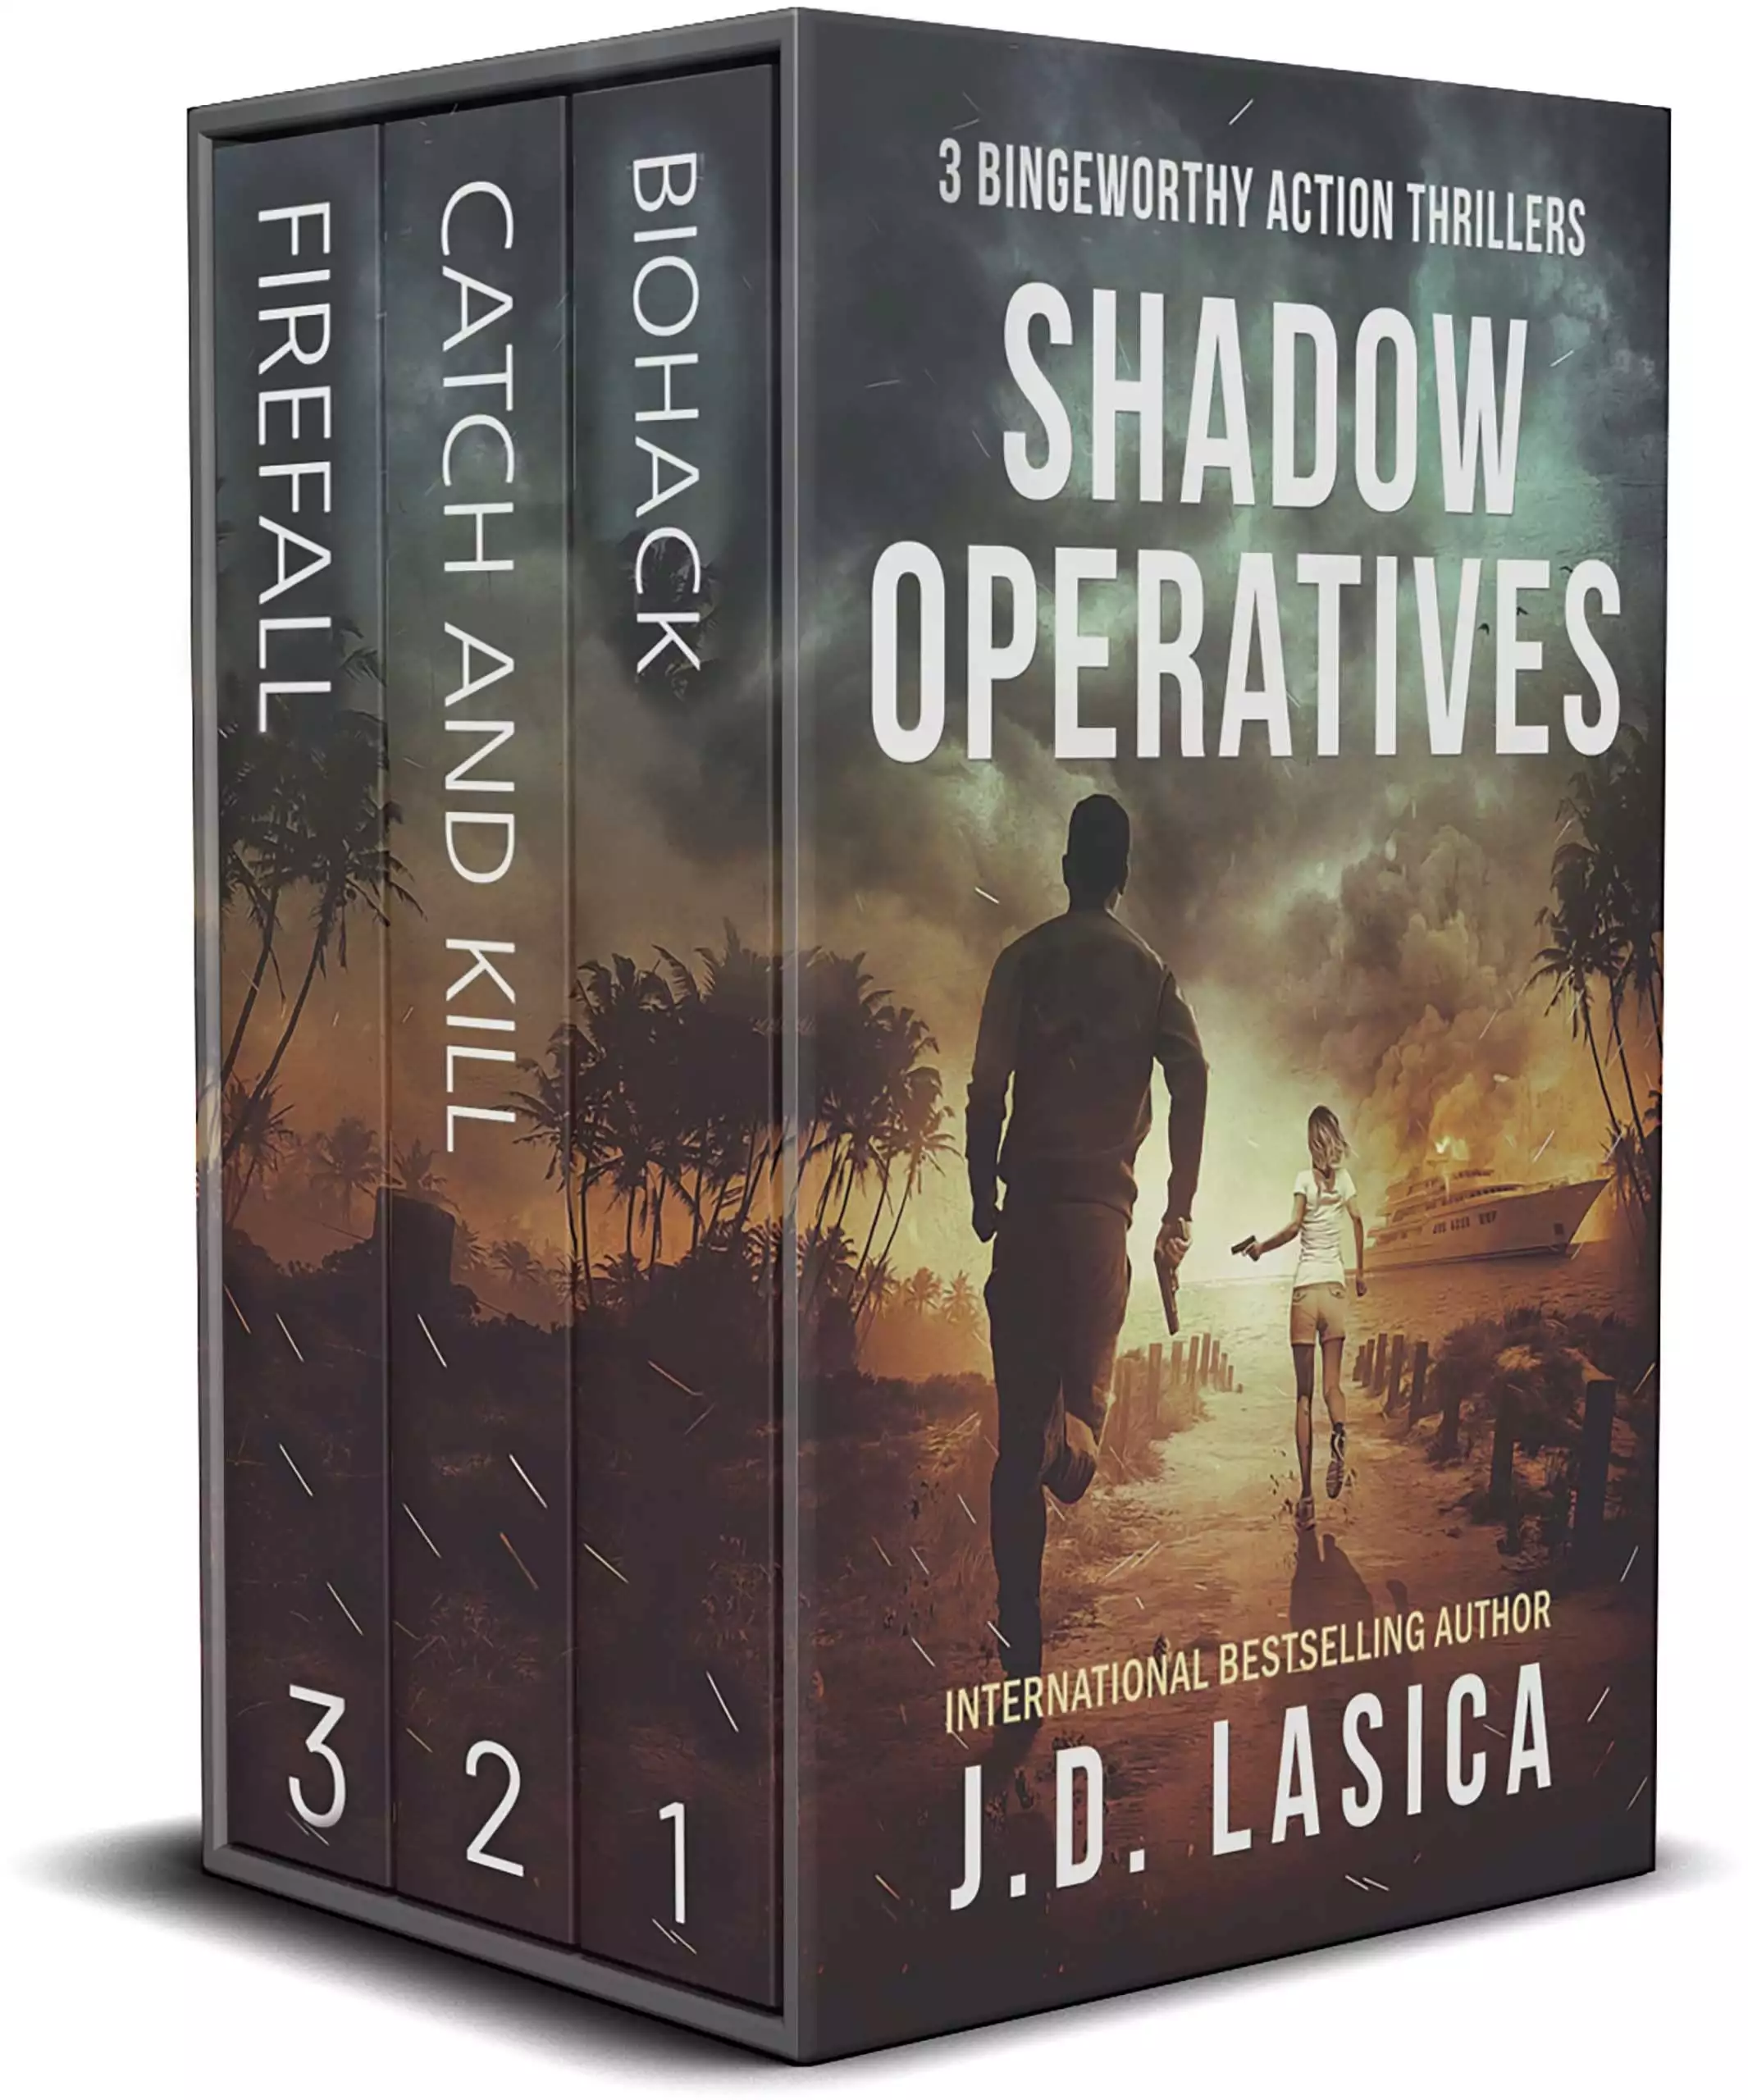 Shadow Operatives Action Thriller Series (Books 1-3 Box Set Bundle)